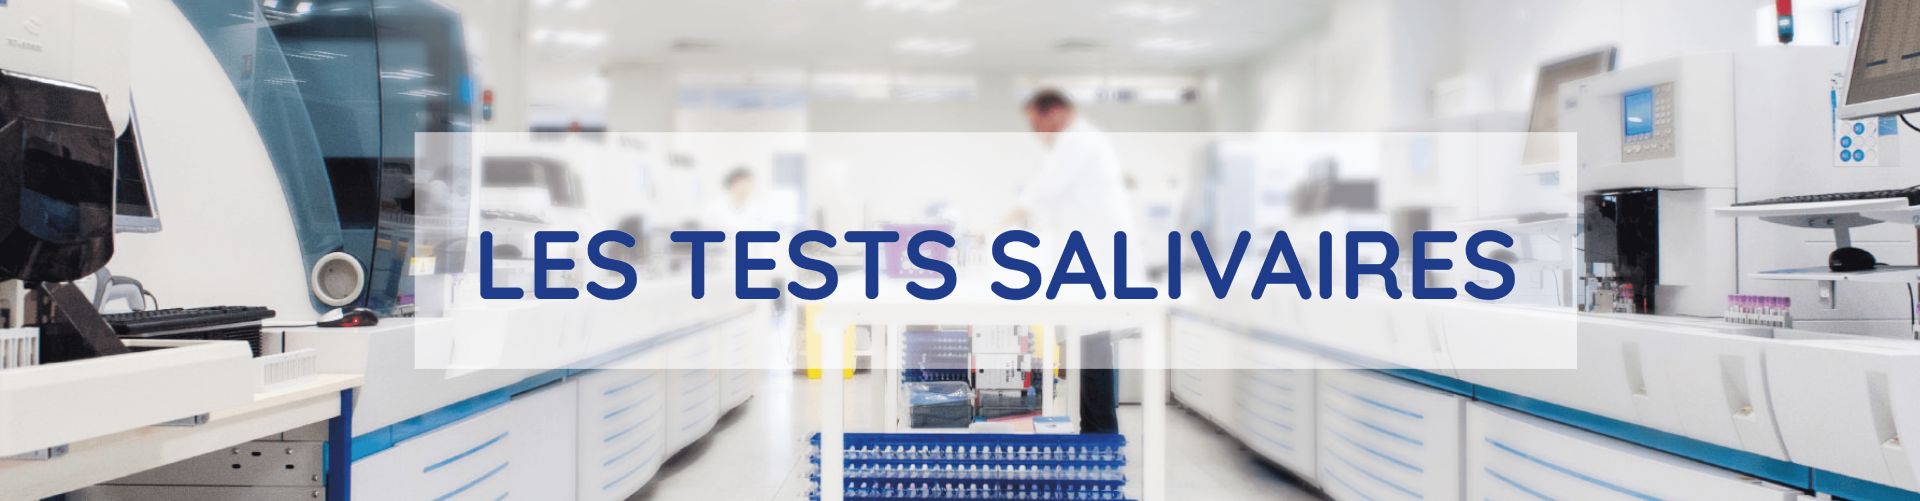 Tests Covid19 : les tests salivaires - Biogroup